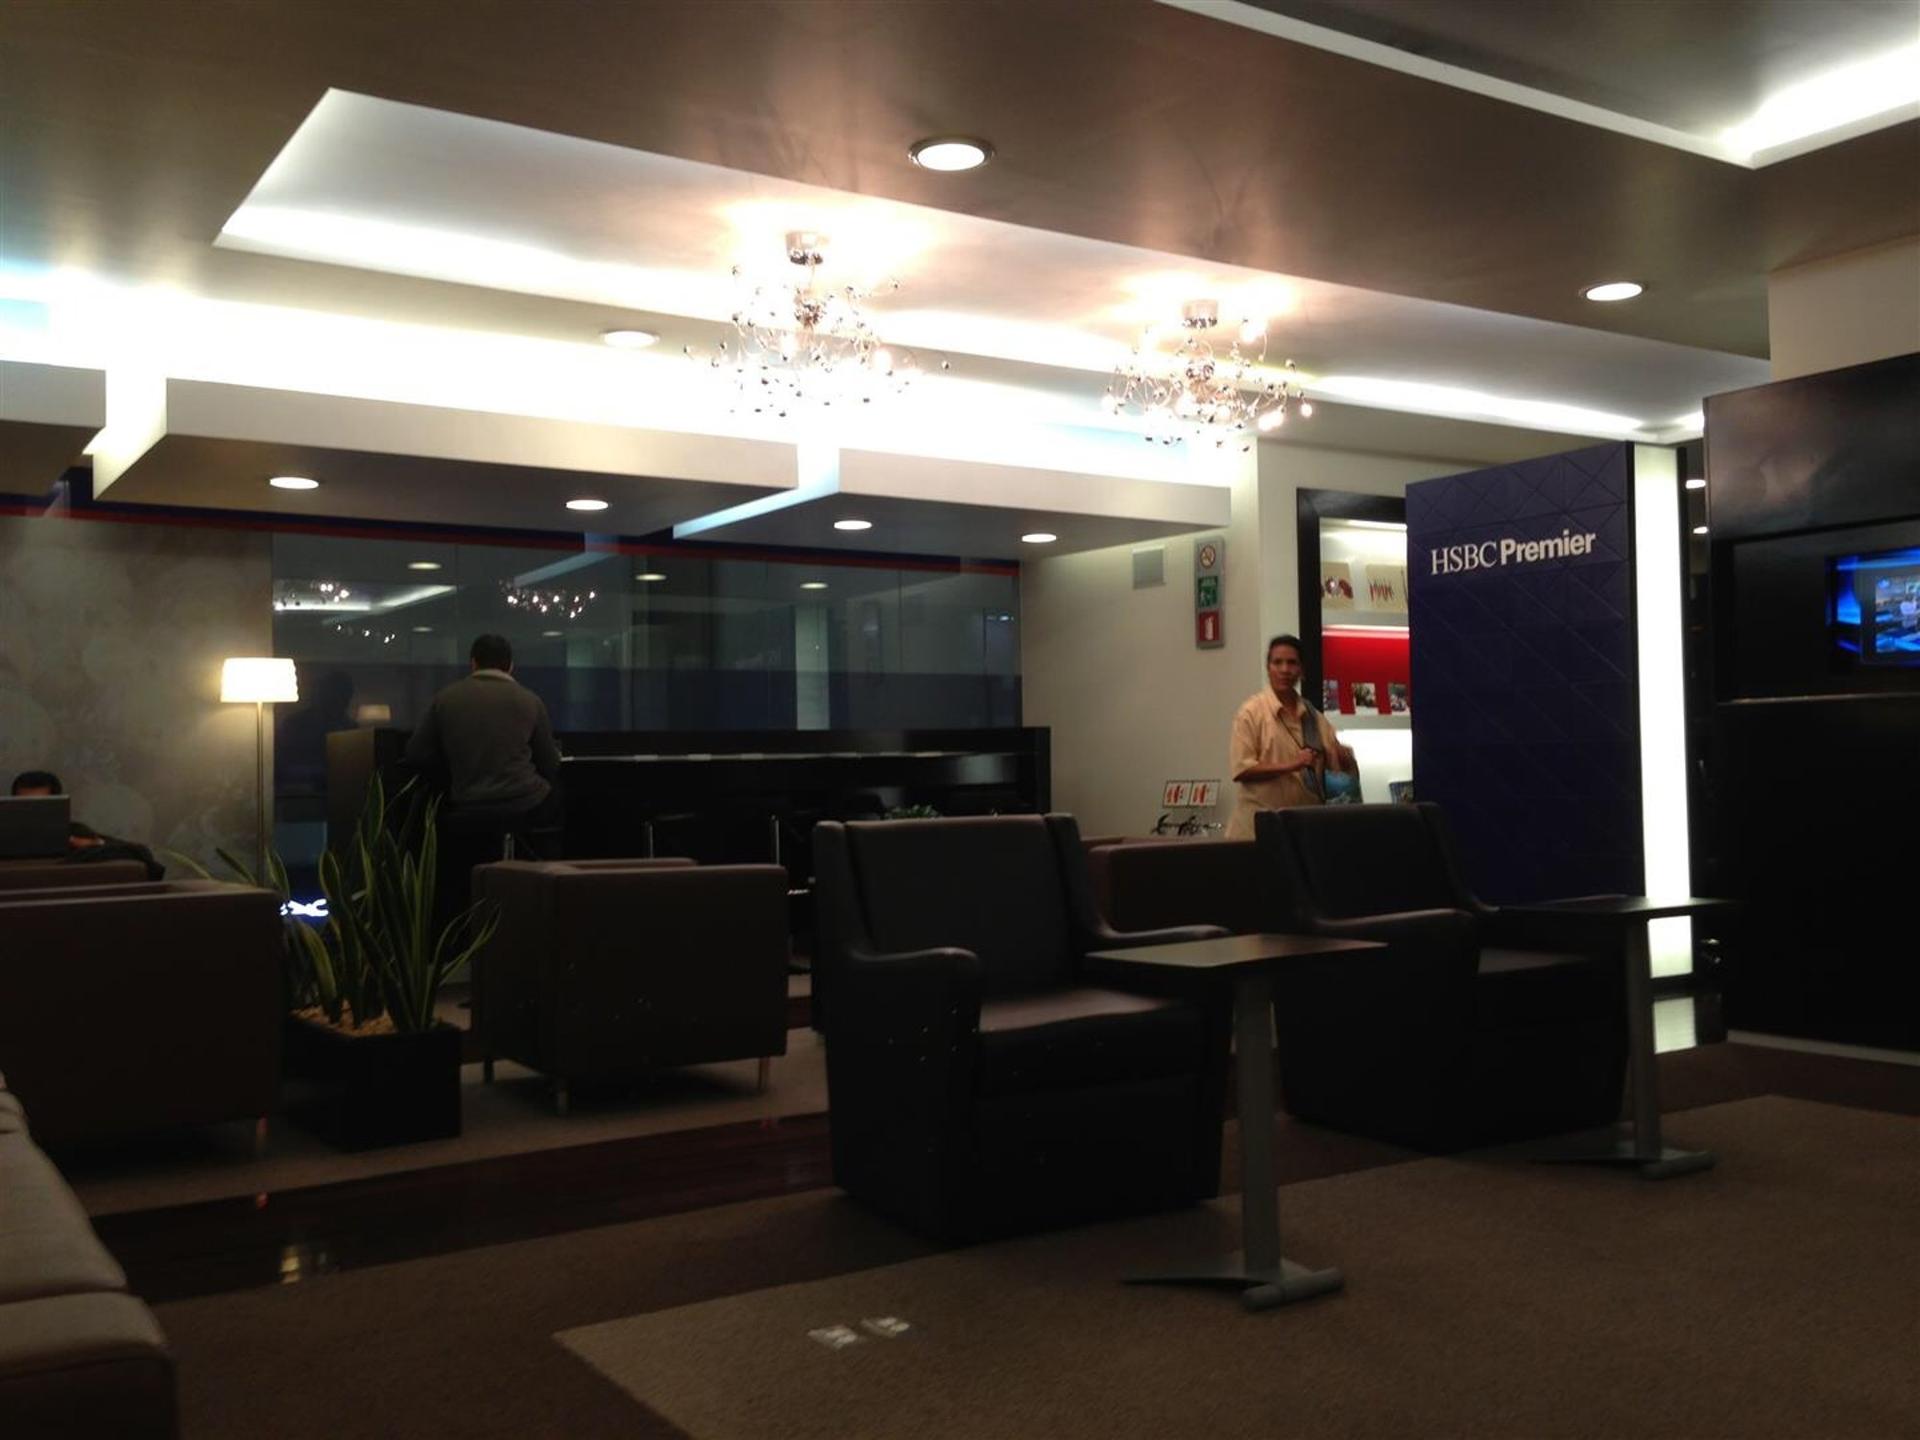 HSBC Premier Lounge image 2 of 4